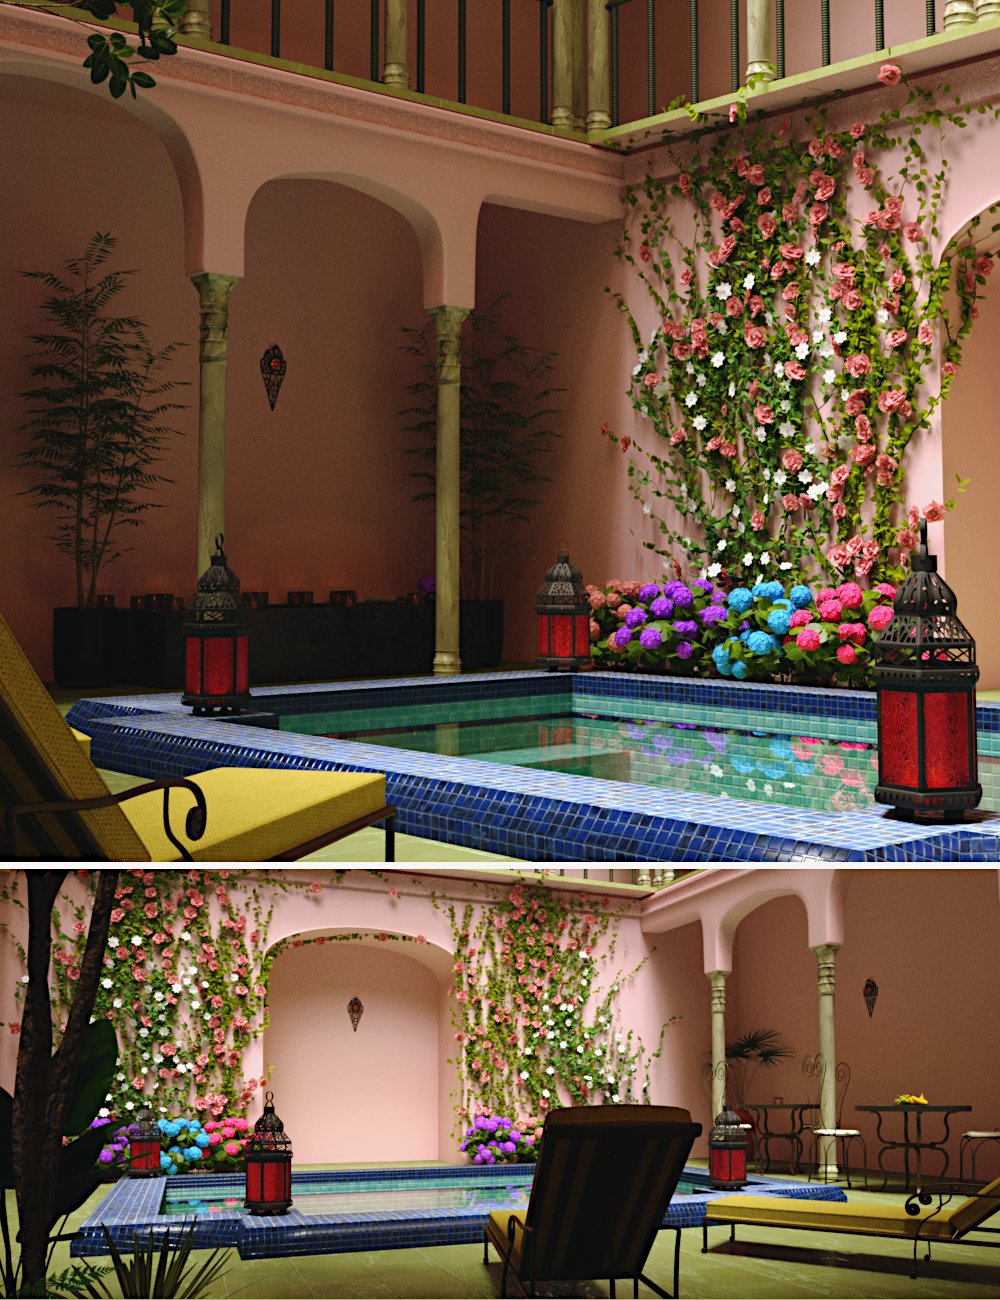 Moroccan Pool Yard by: Toyen, 3D Models by Daz 3D